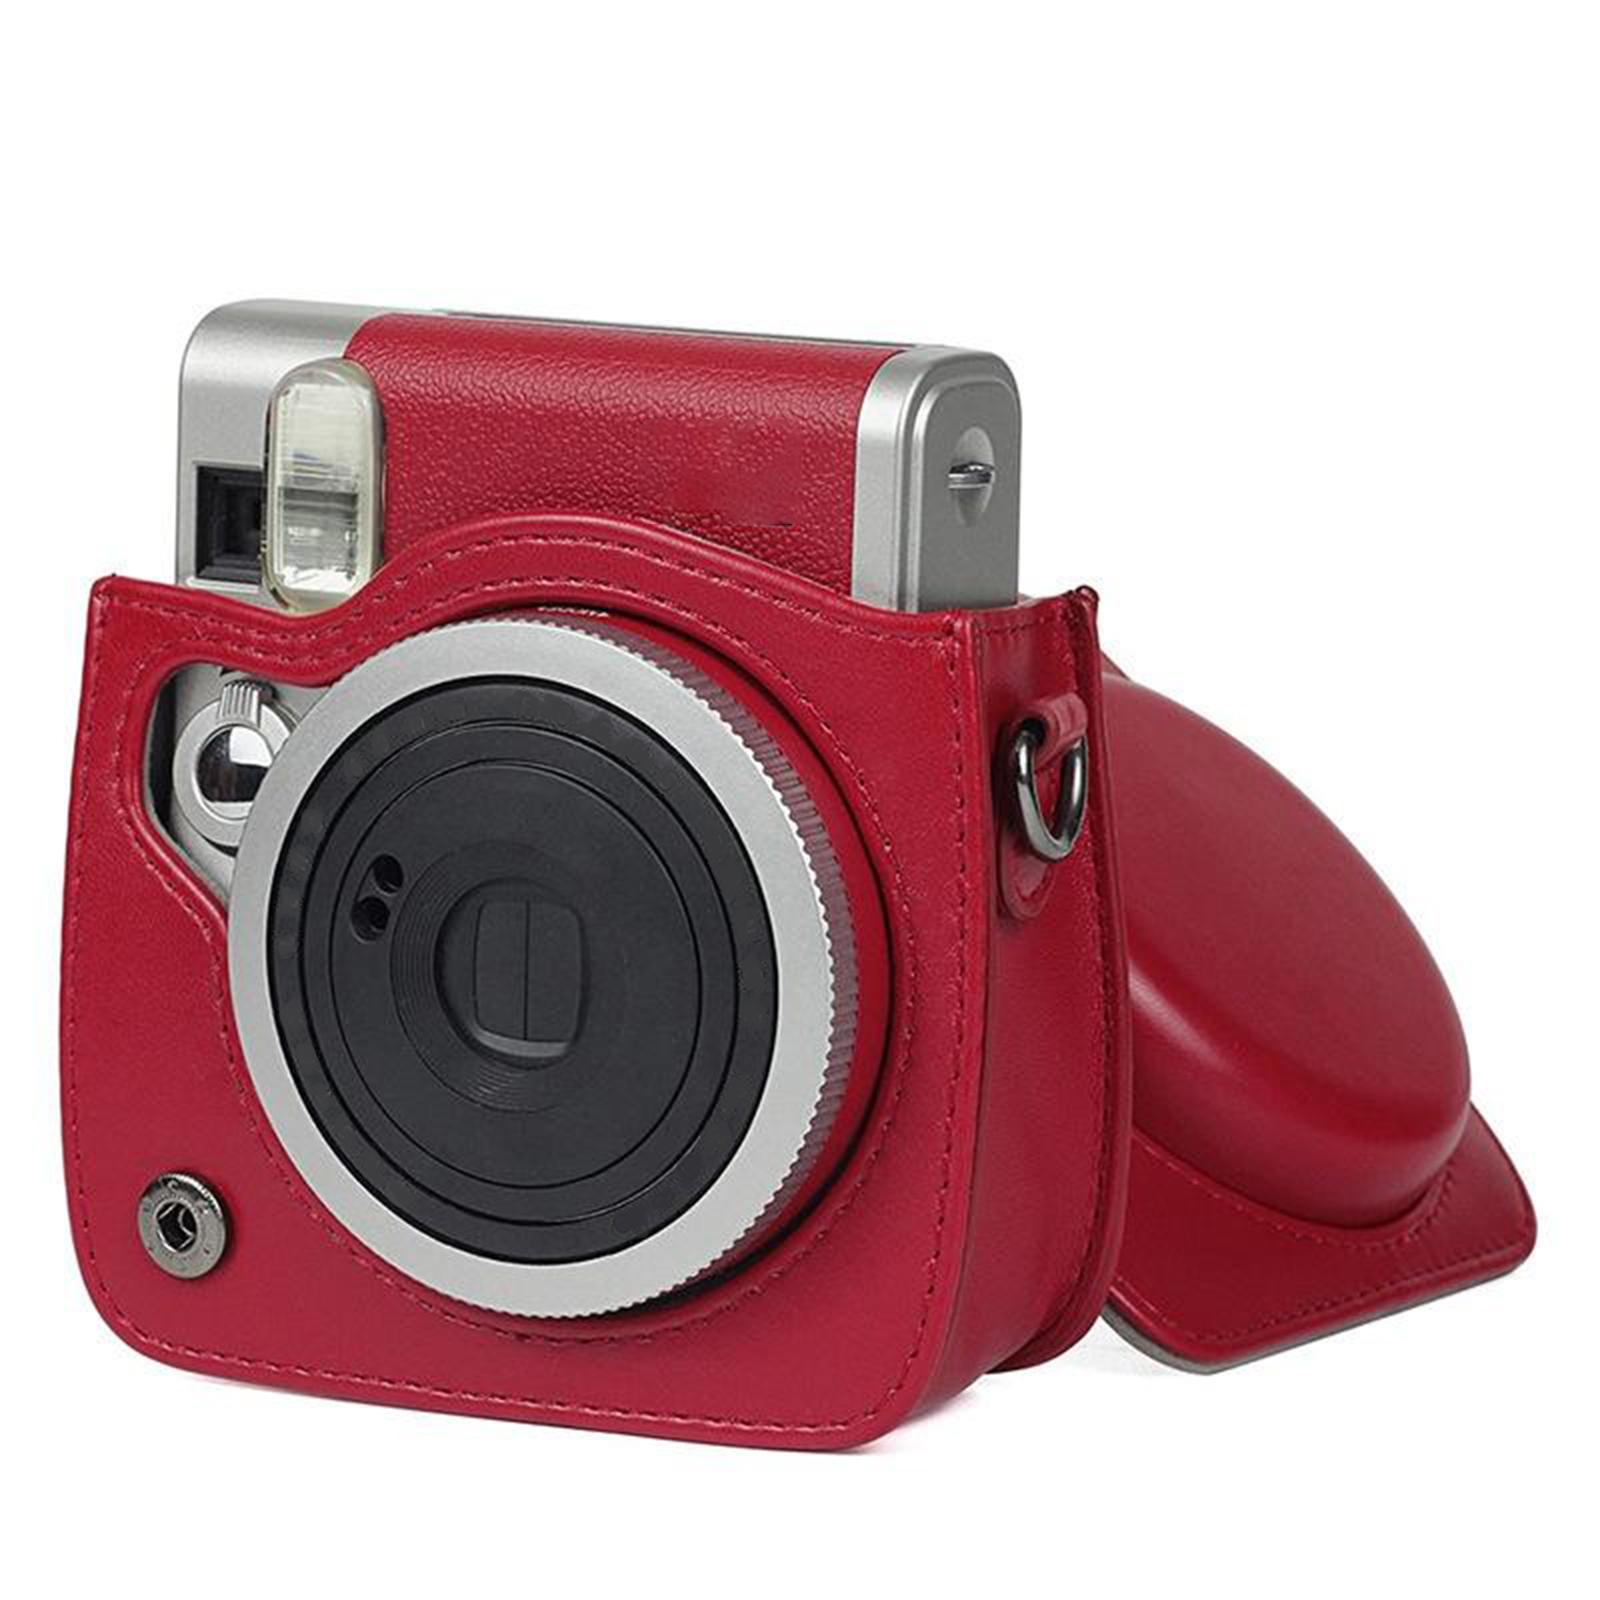 Rustic Protective Case for Mini 90 Instant Film Camera Accessories